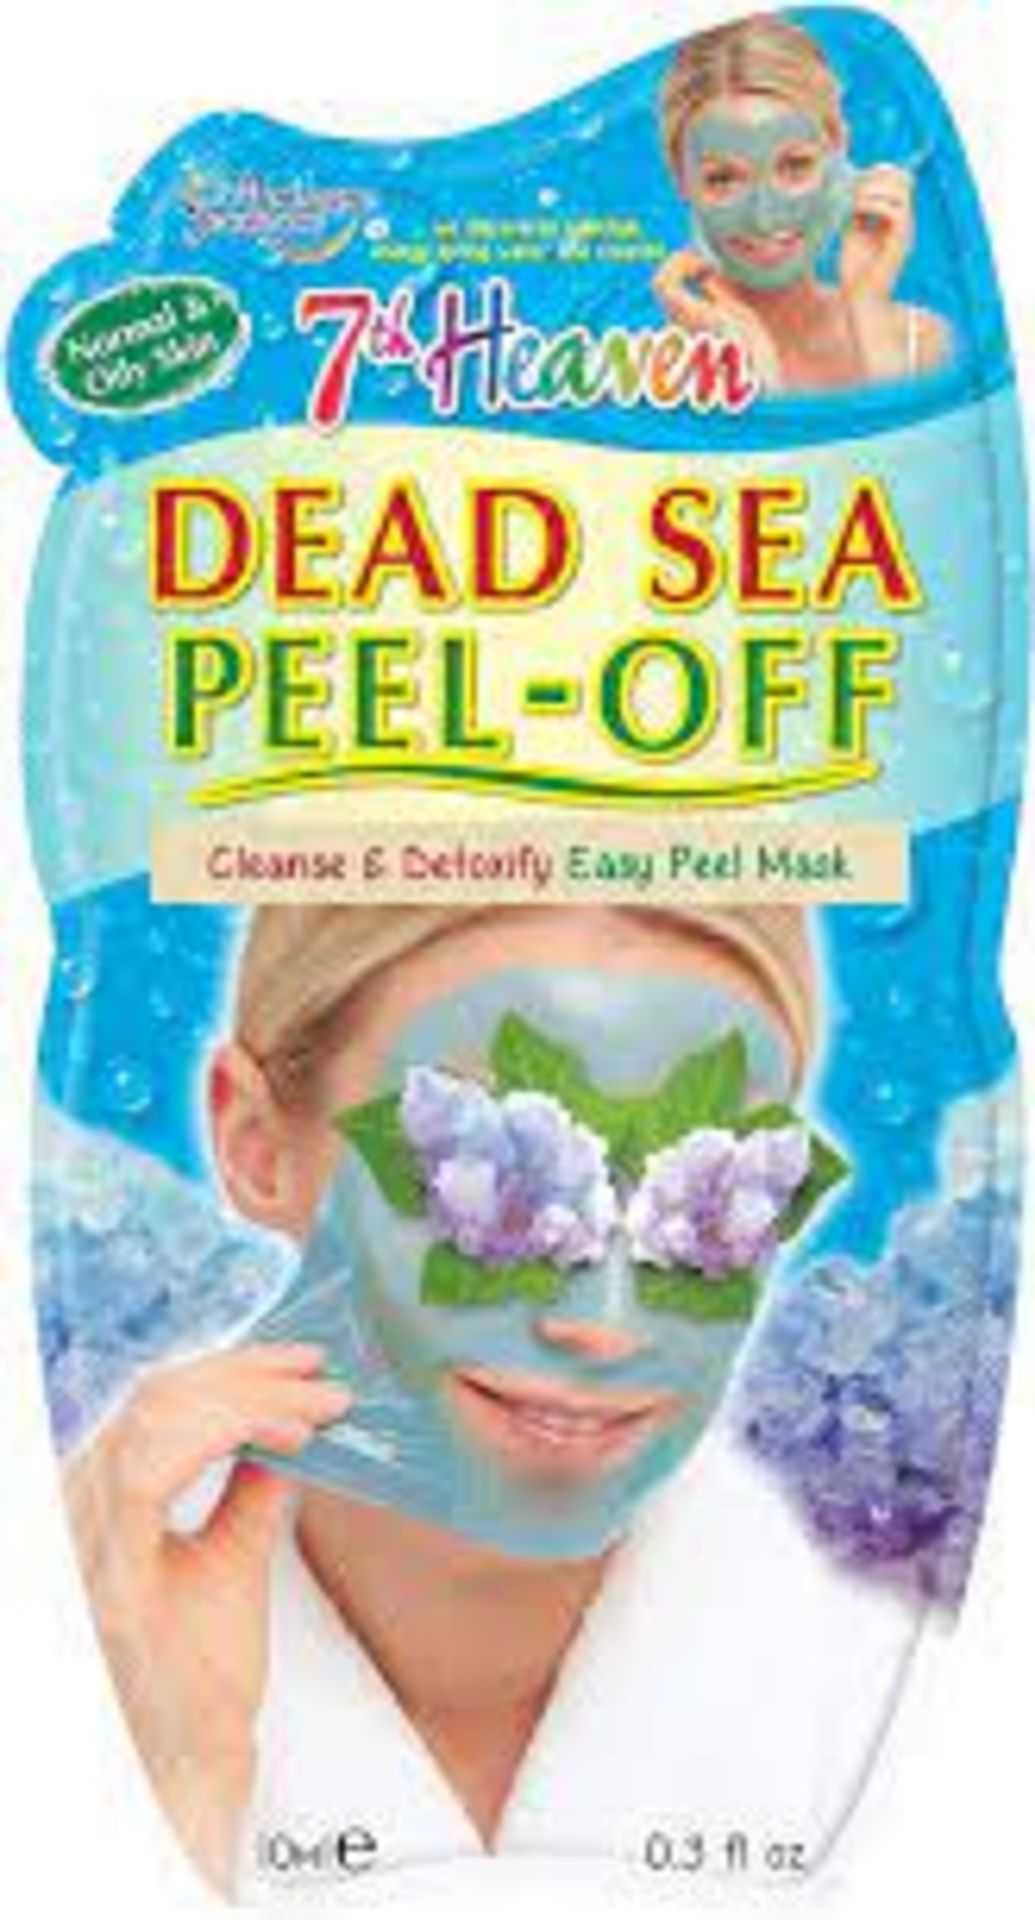 364 X BRAND NEW 7TH HEAVEN DEAD SEA PEEL OFF CLEANSE AND DETOXIFY EASY PEEL MASKS 10ML P3